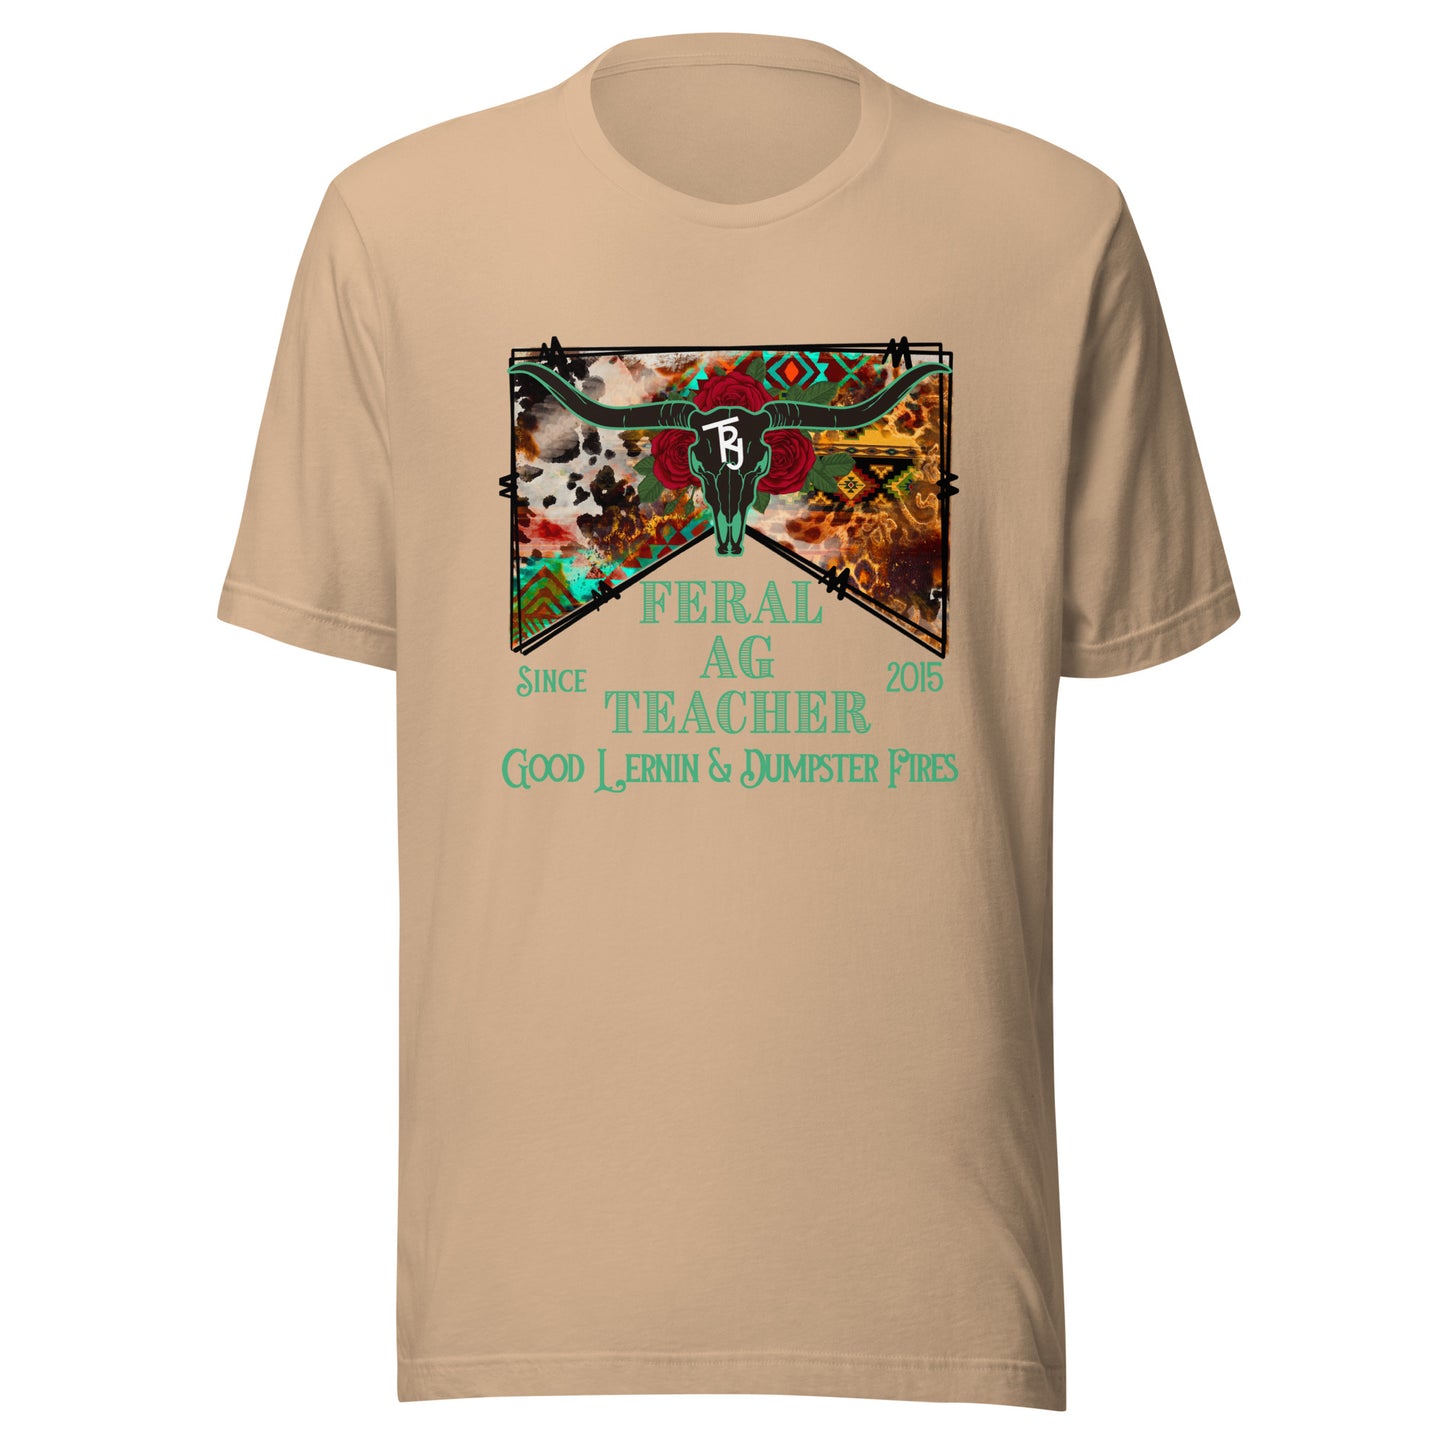 FERAL AG TEACHER Unisex Premium T-Shirt